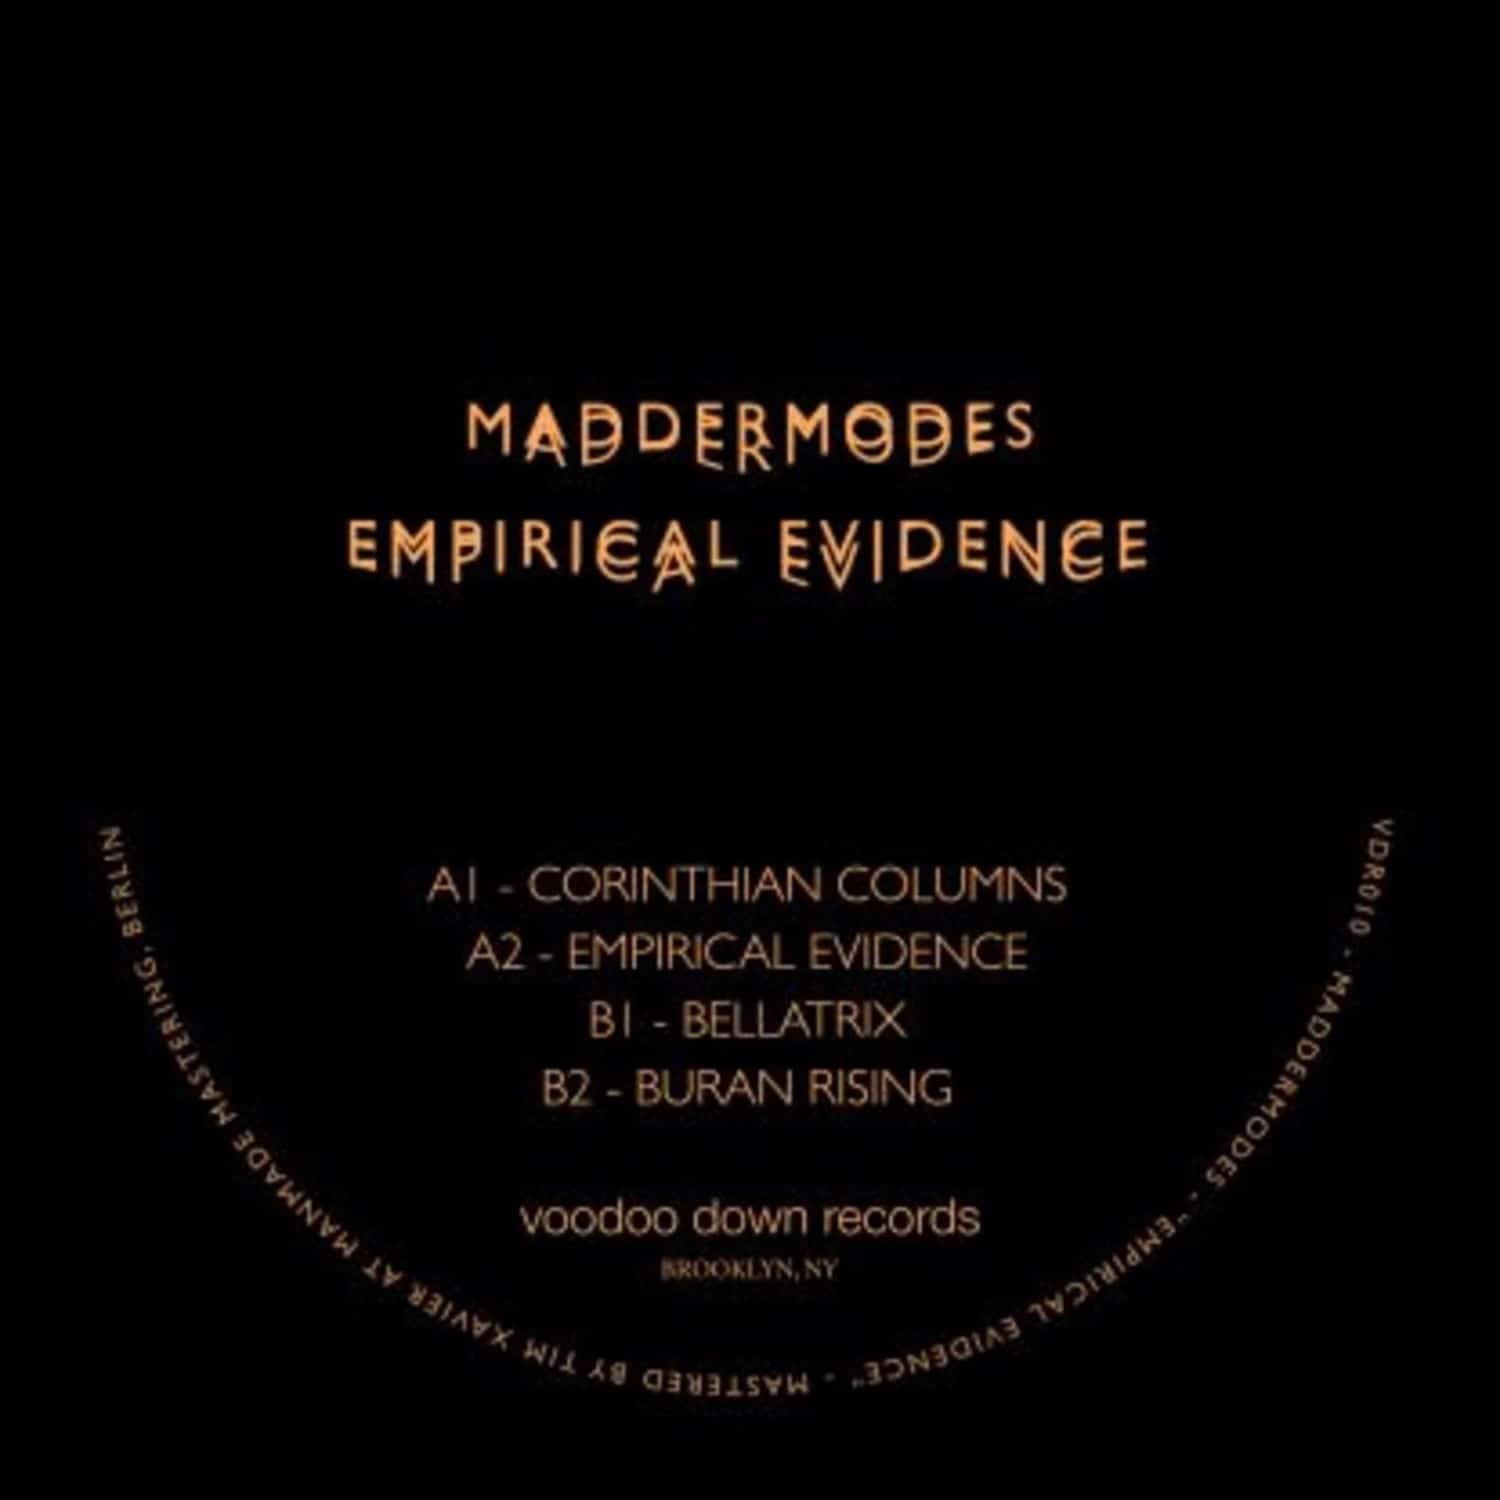 Maddermodes - EMPIRICAL EVIDENCE